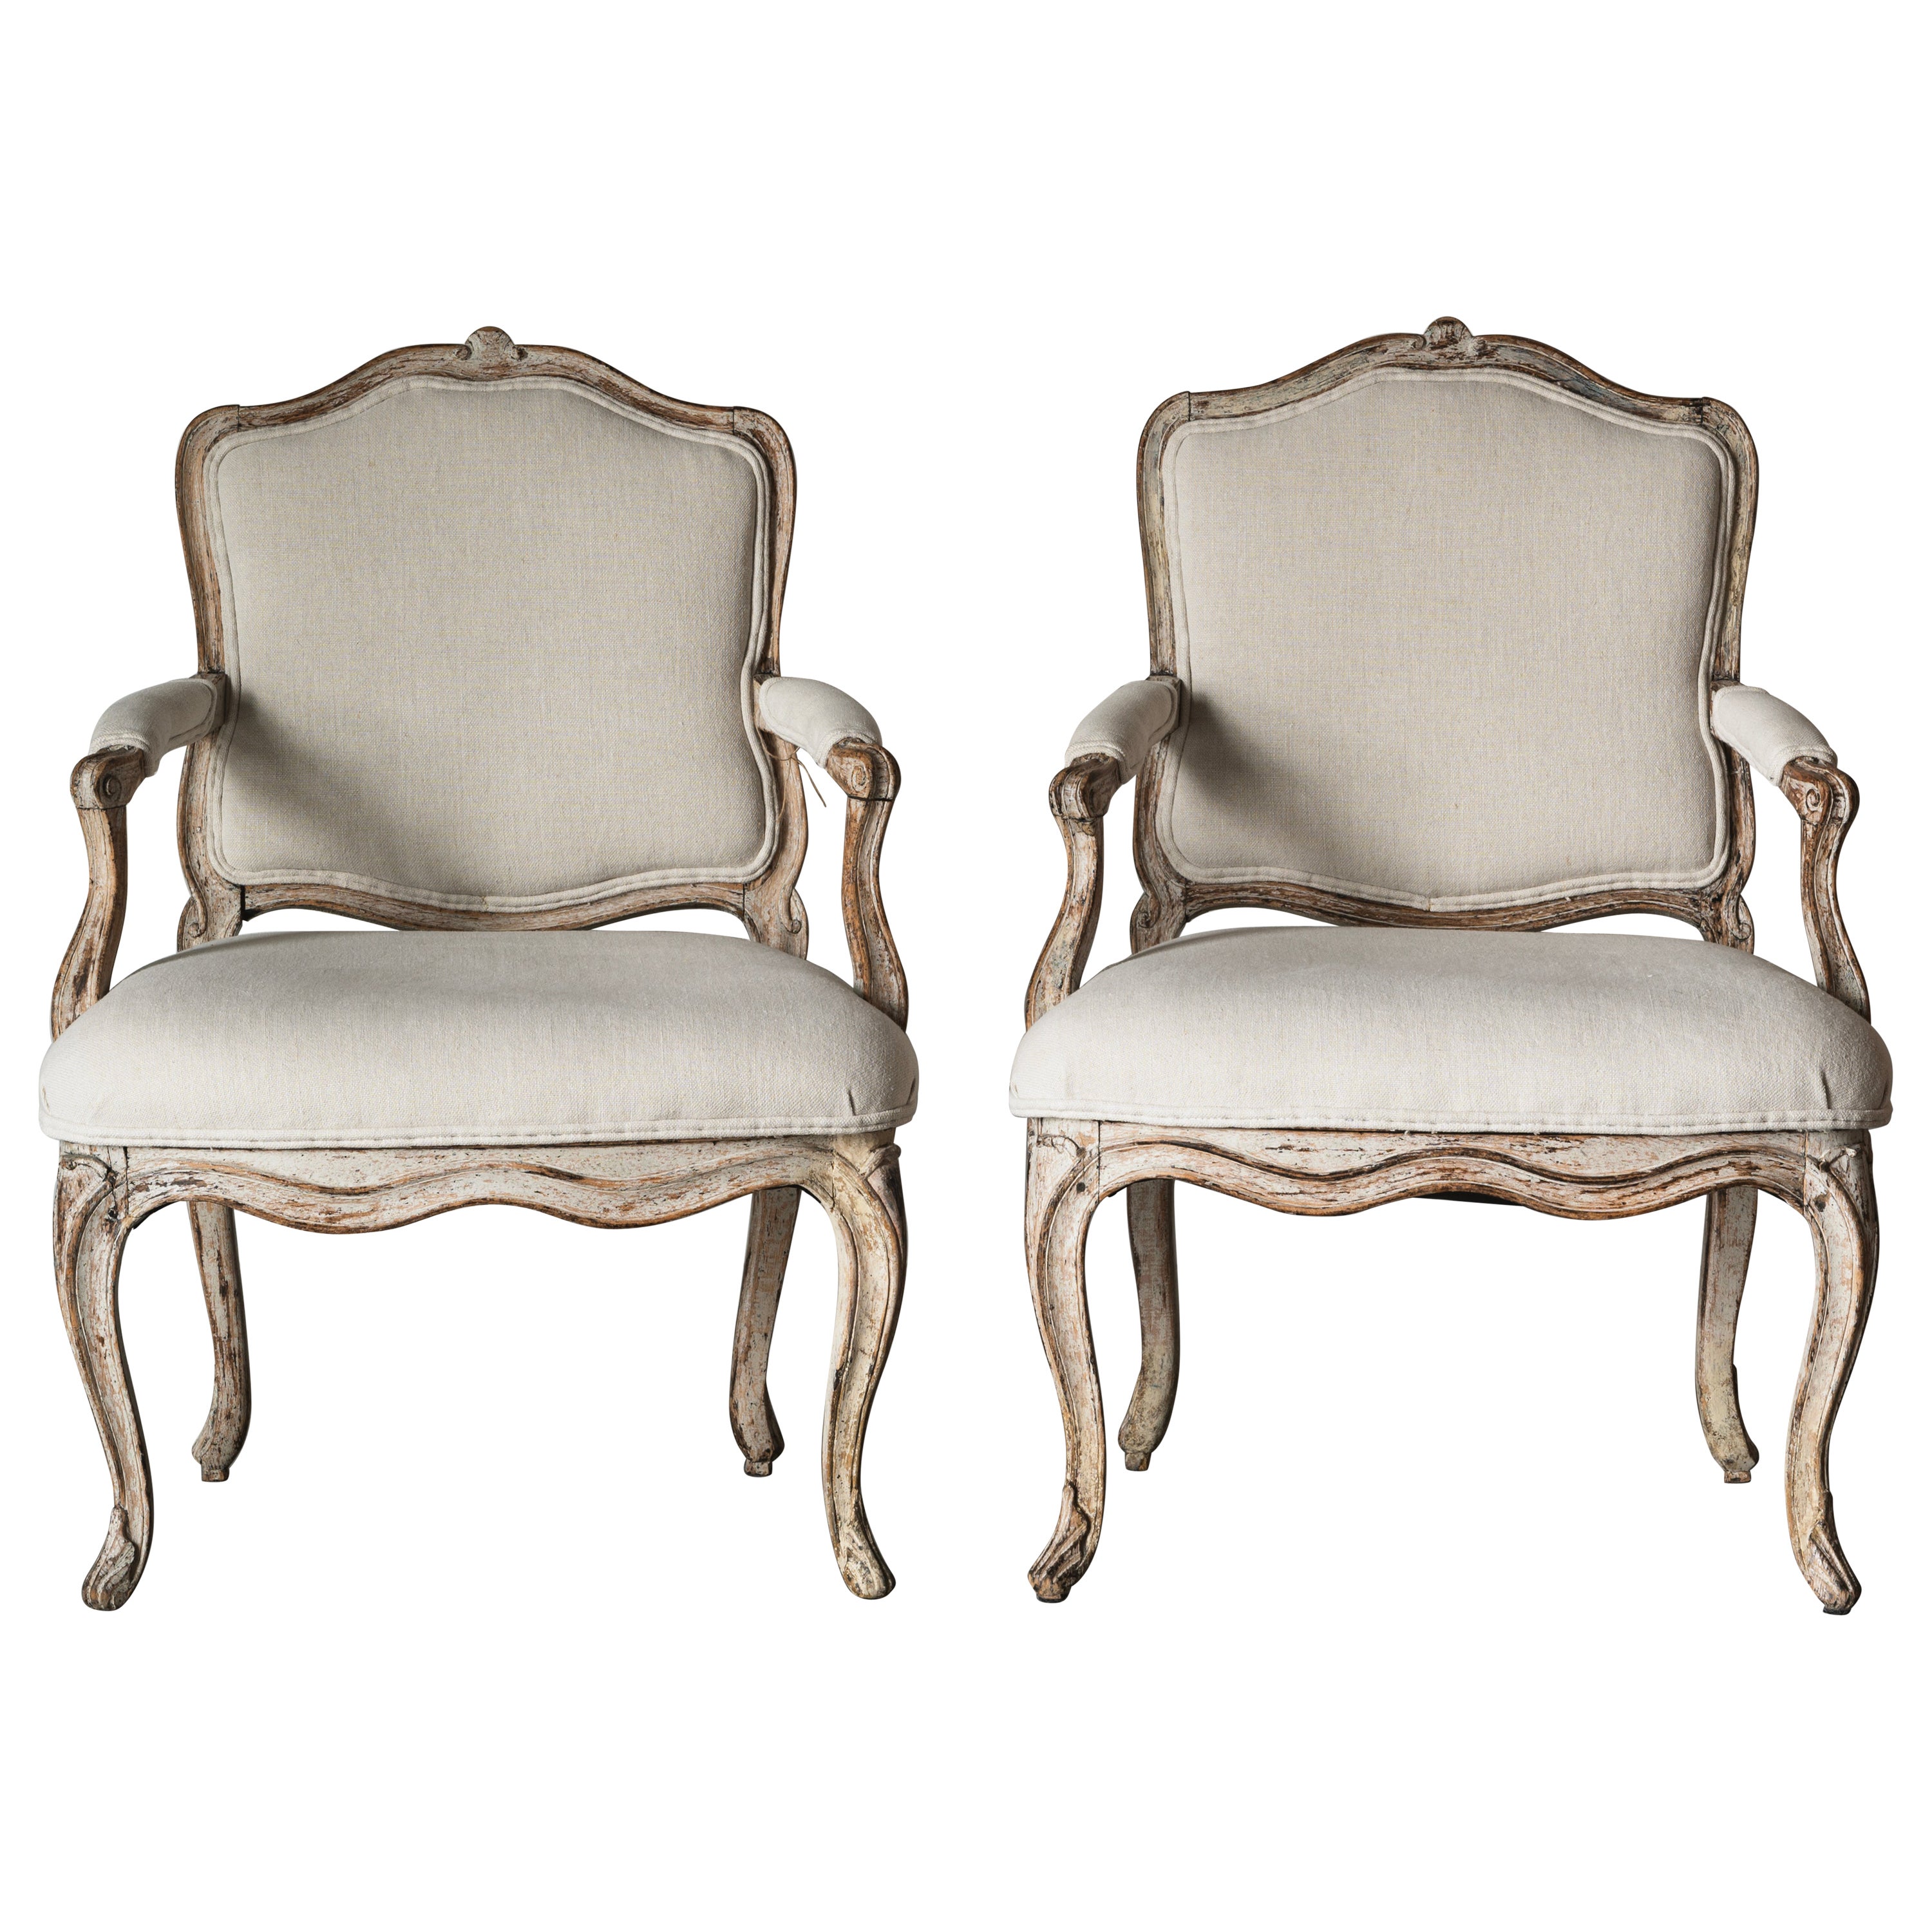 Feines Paar schwedischer Rokoko-Sessel aus dem 18. Jahrhundert